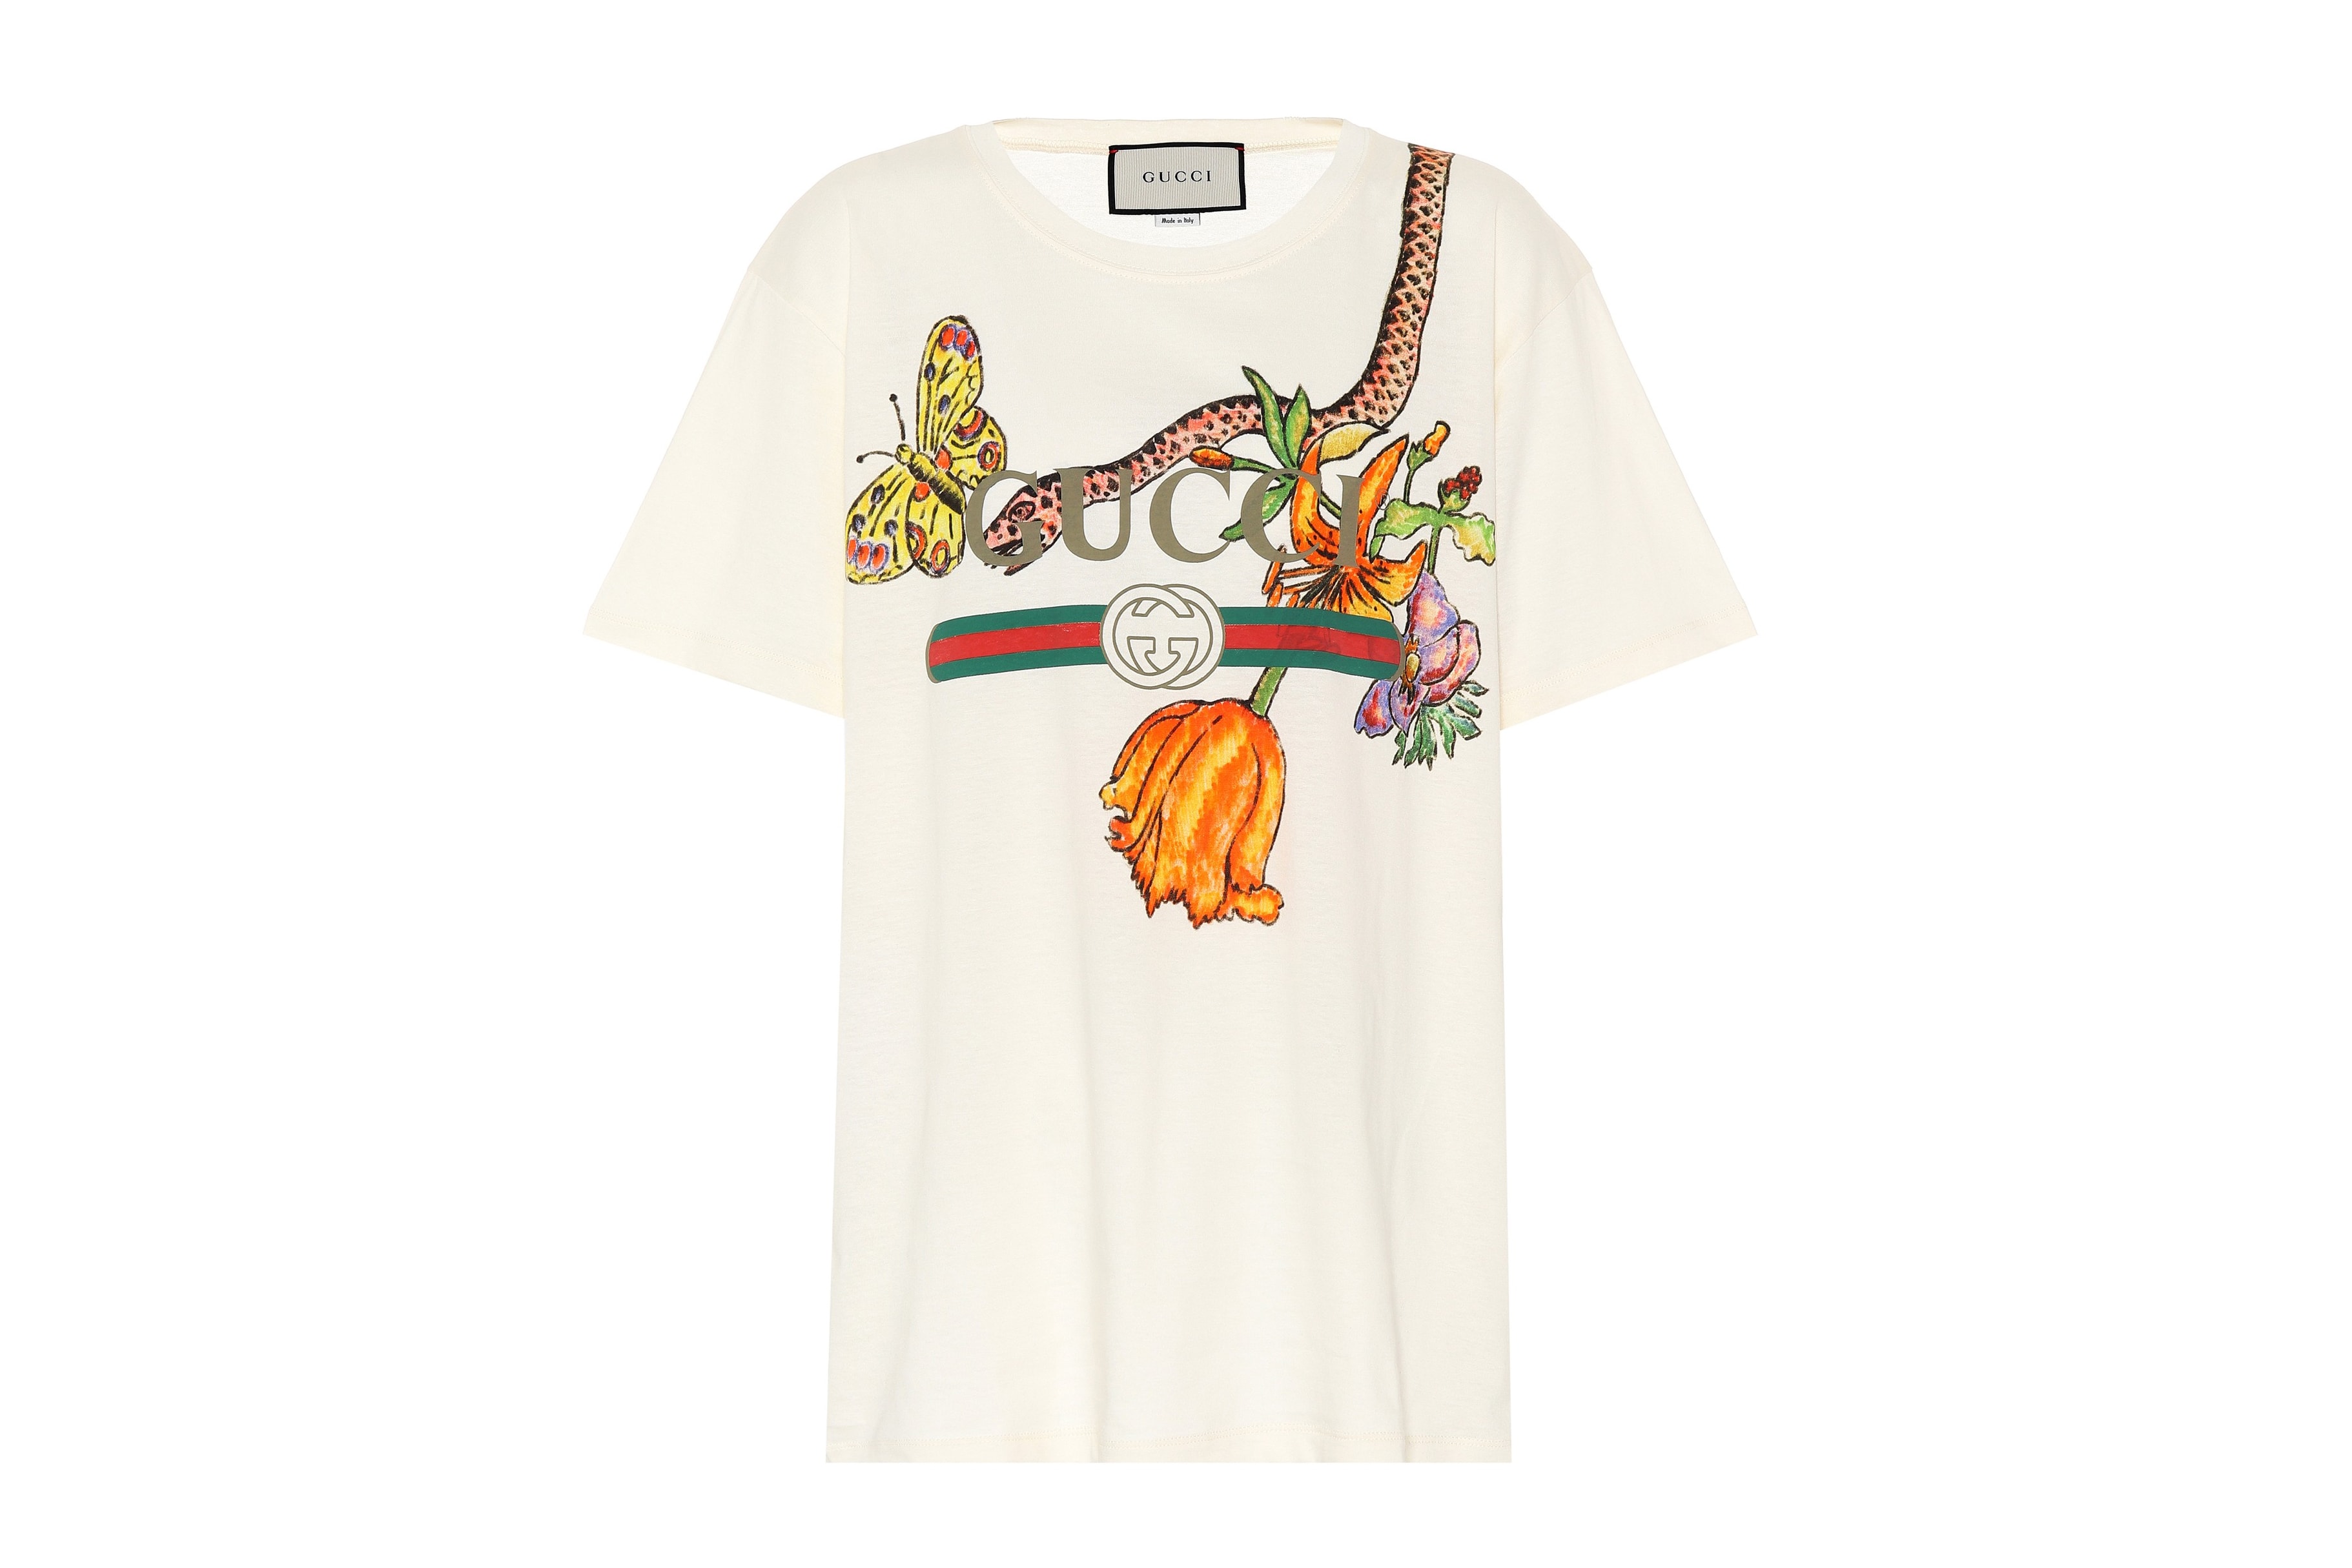 Gucci White Vintage Logo T-Shirt Jungle Print Floral Snake Iconic